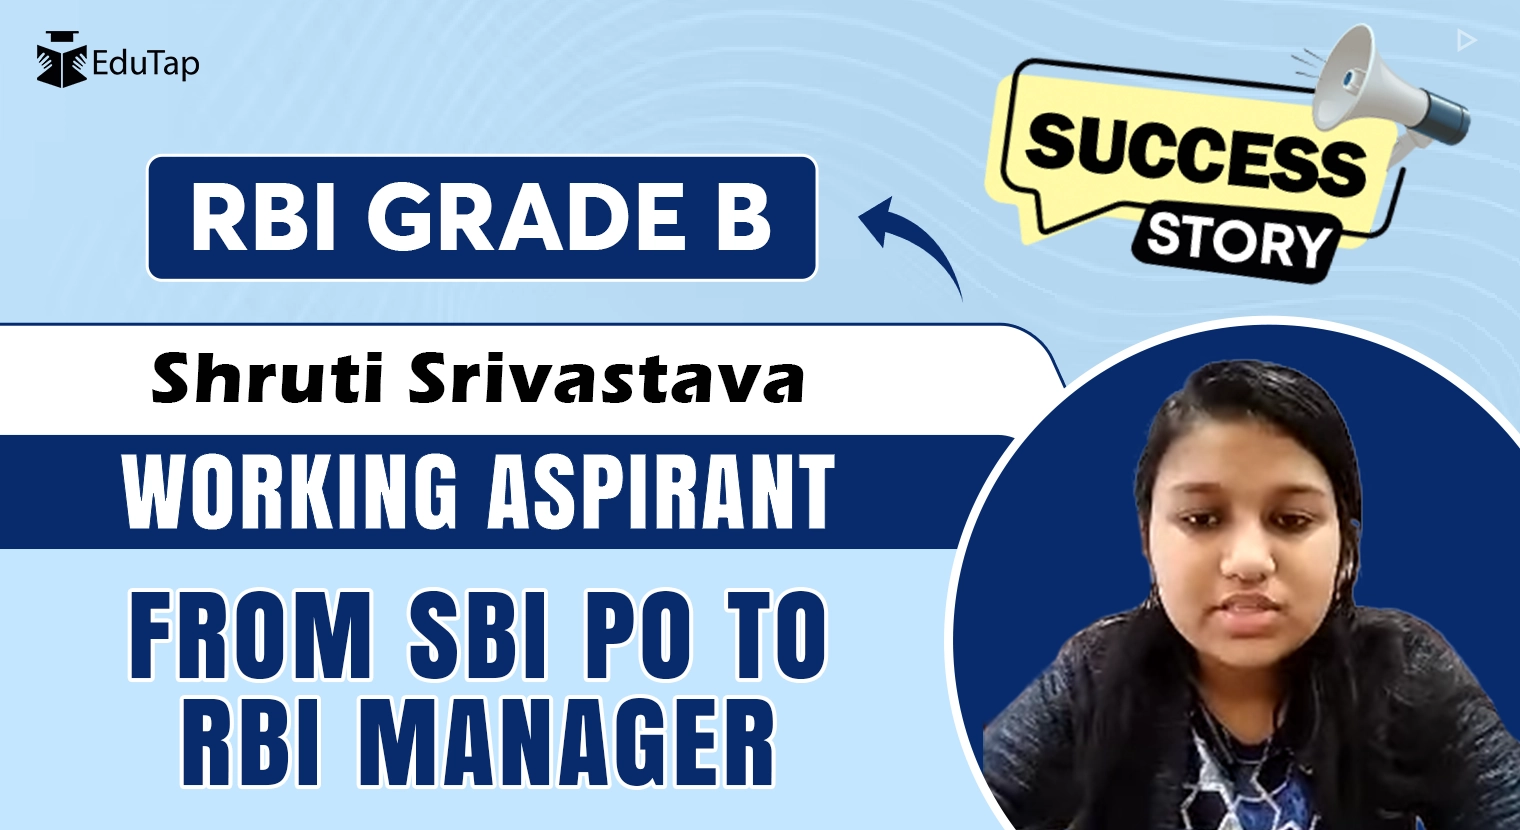 RBI Grade B Success Story - Shruti Srivastava